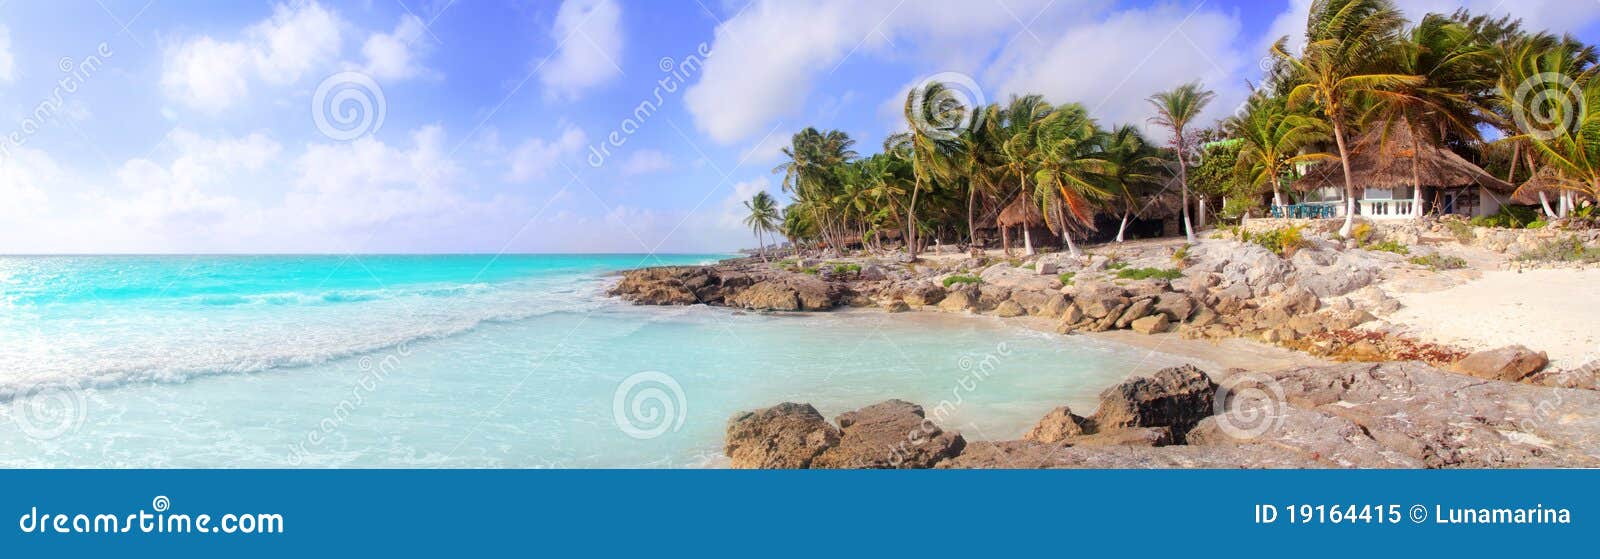 caribbean tulum mexico tropical panoramic beach